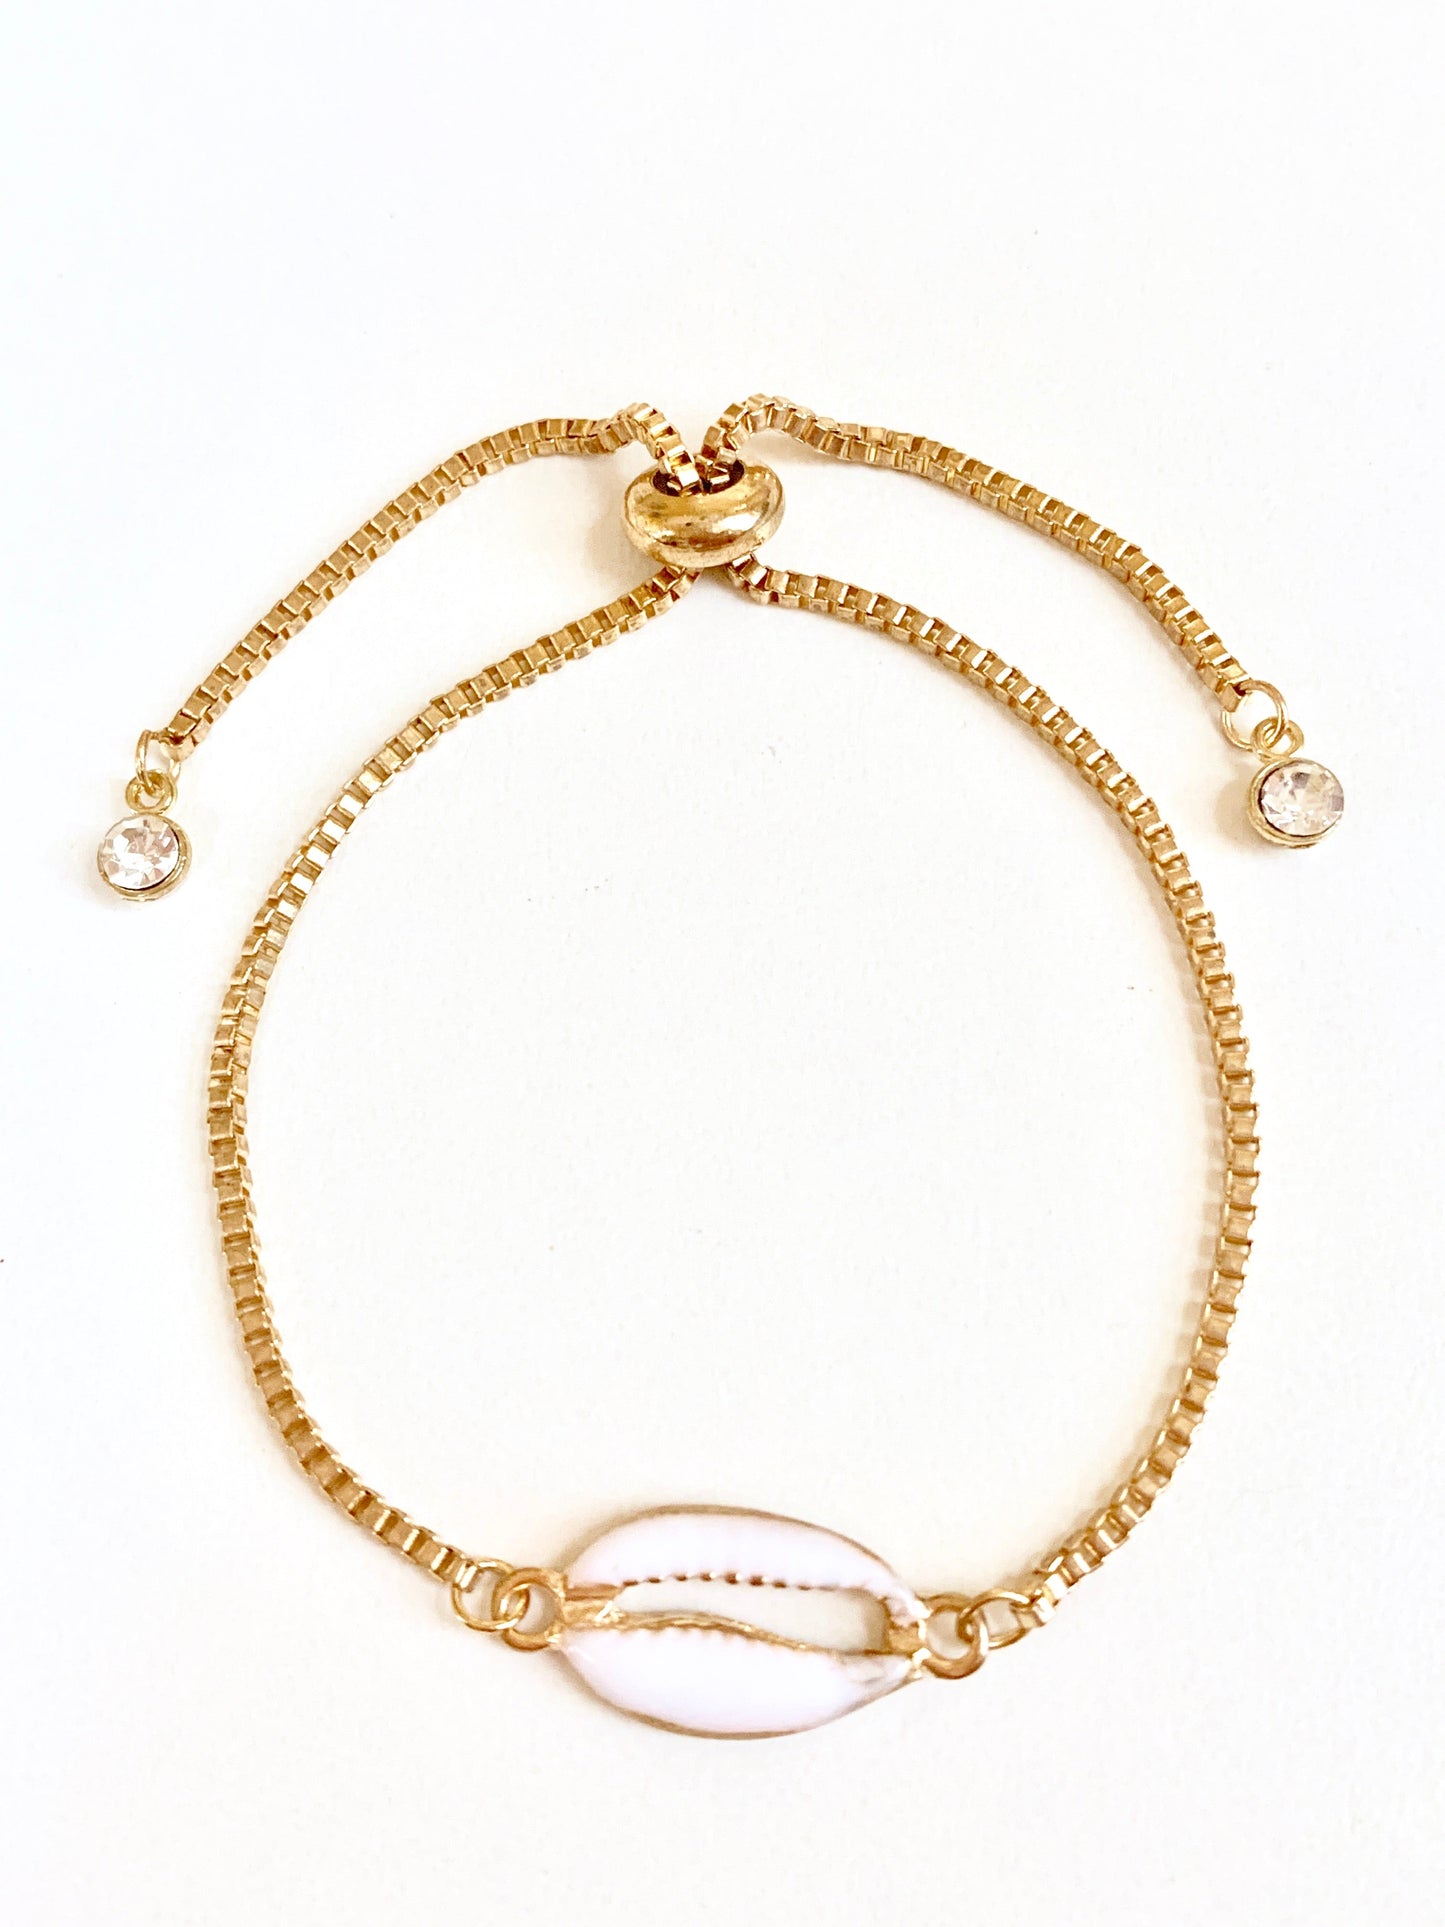 Gold Seashell Bracelet Adjustable Spring Closure - Hollywood Sensation®